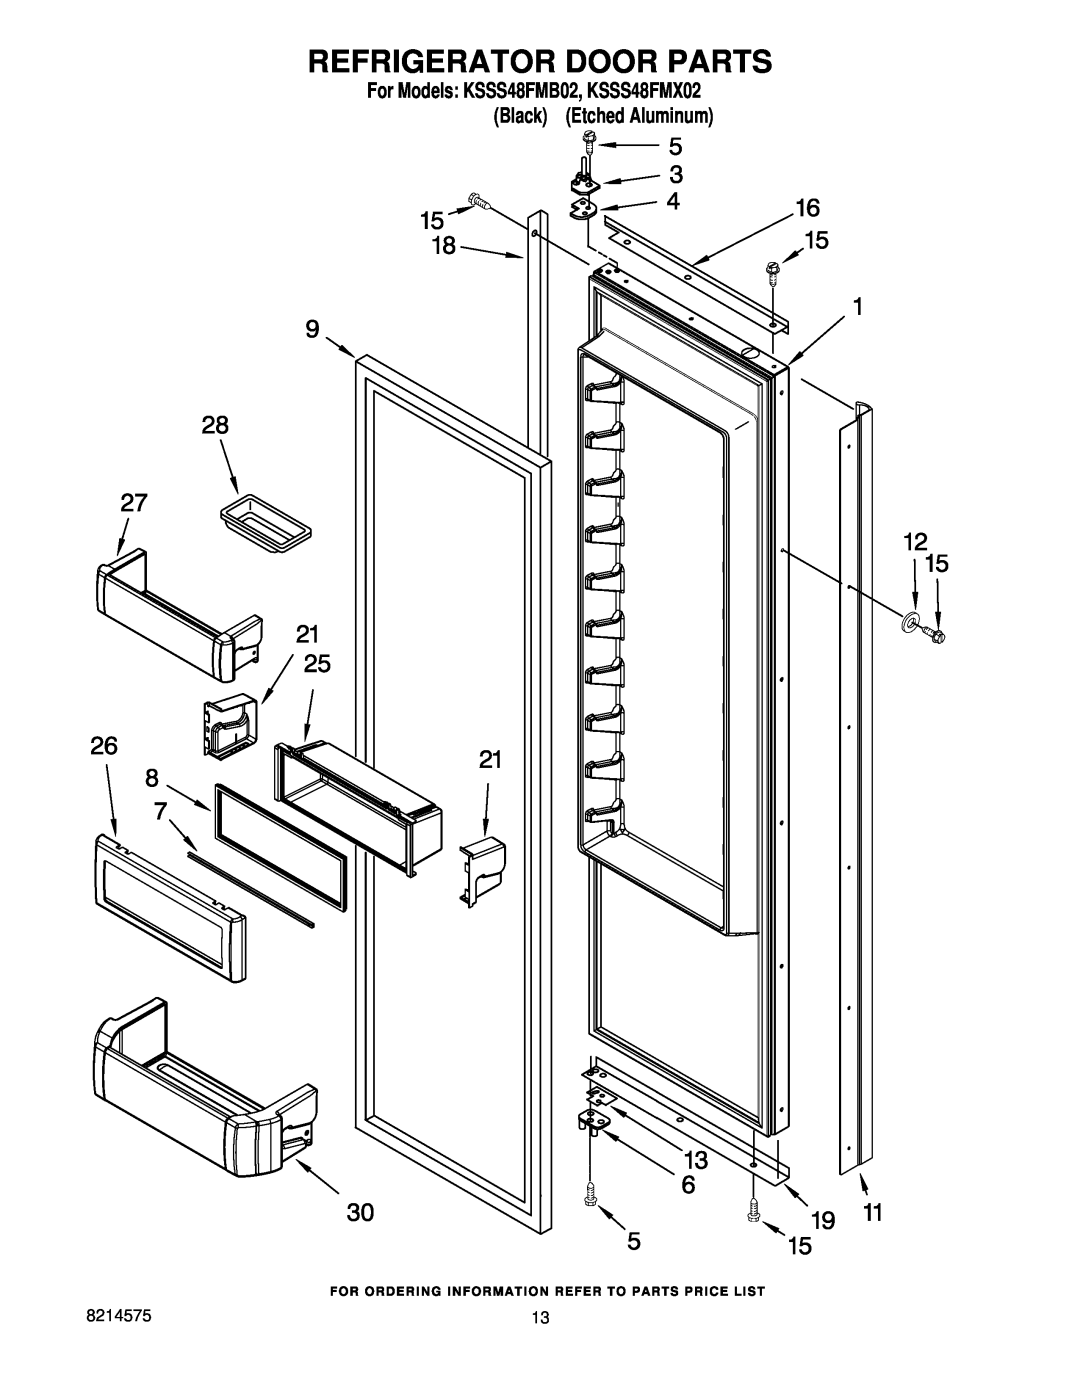 KitchenAid manual Refrigerator Door Parts, For Models KSSS48FMB02, KSSS48FMX02 Black Etched Aluminum 